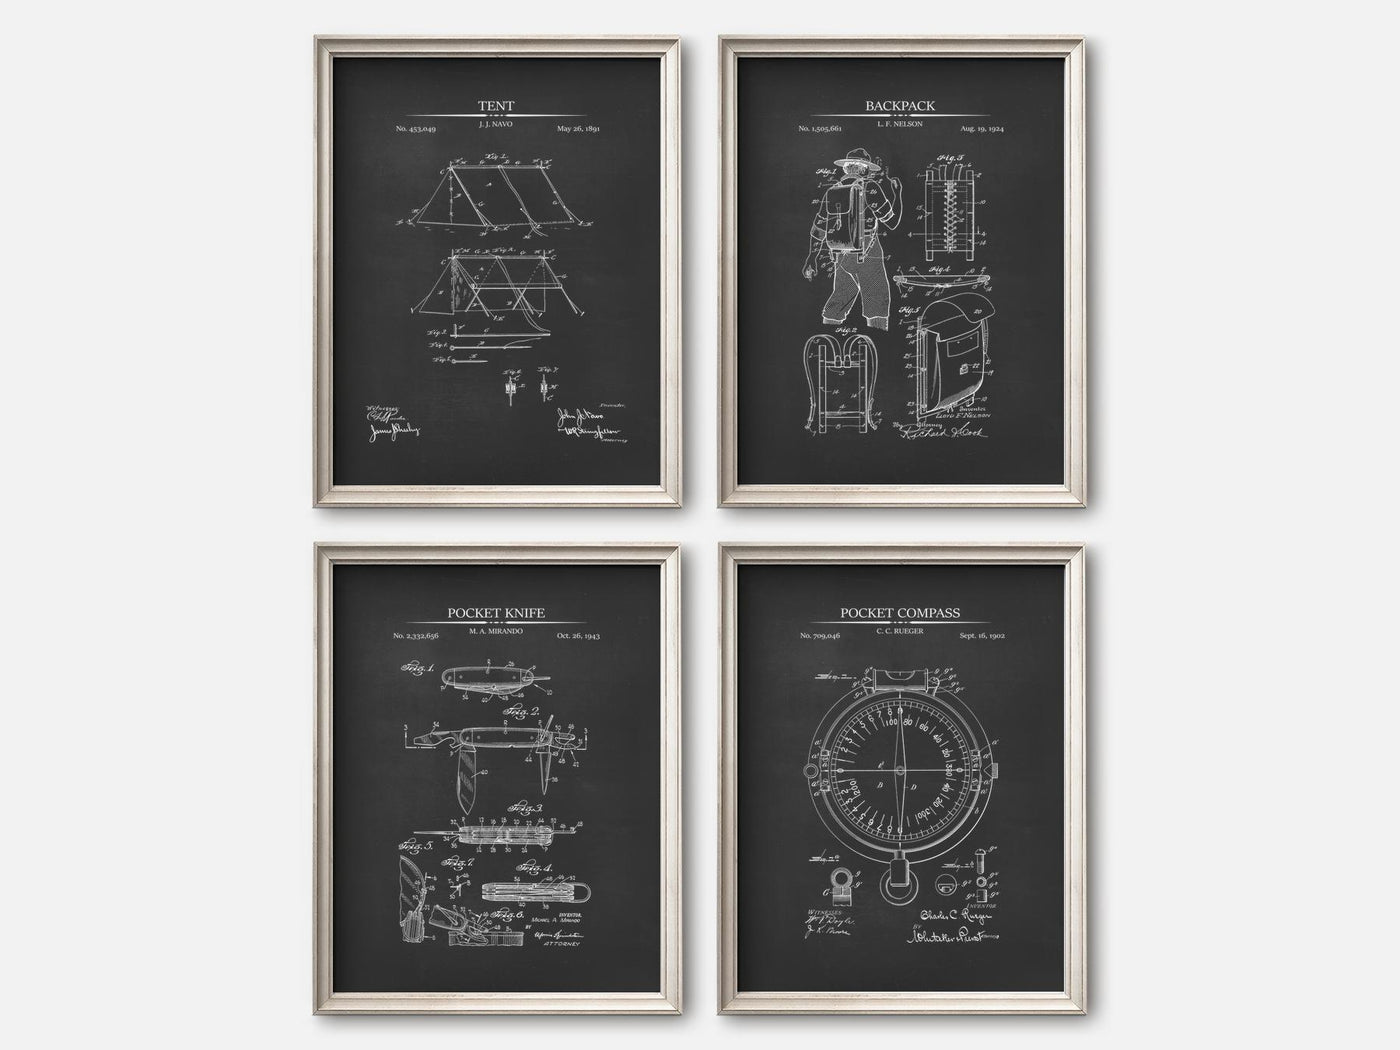 Camping Patent Print Set of 3 mockup - A_t10017-V1-PC_F+O-SS_4-PS_5x7-C_cha variant